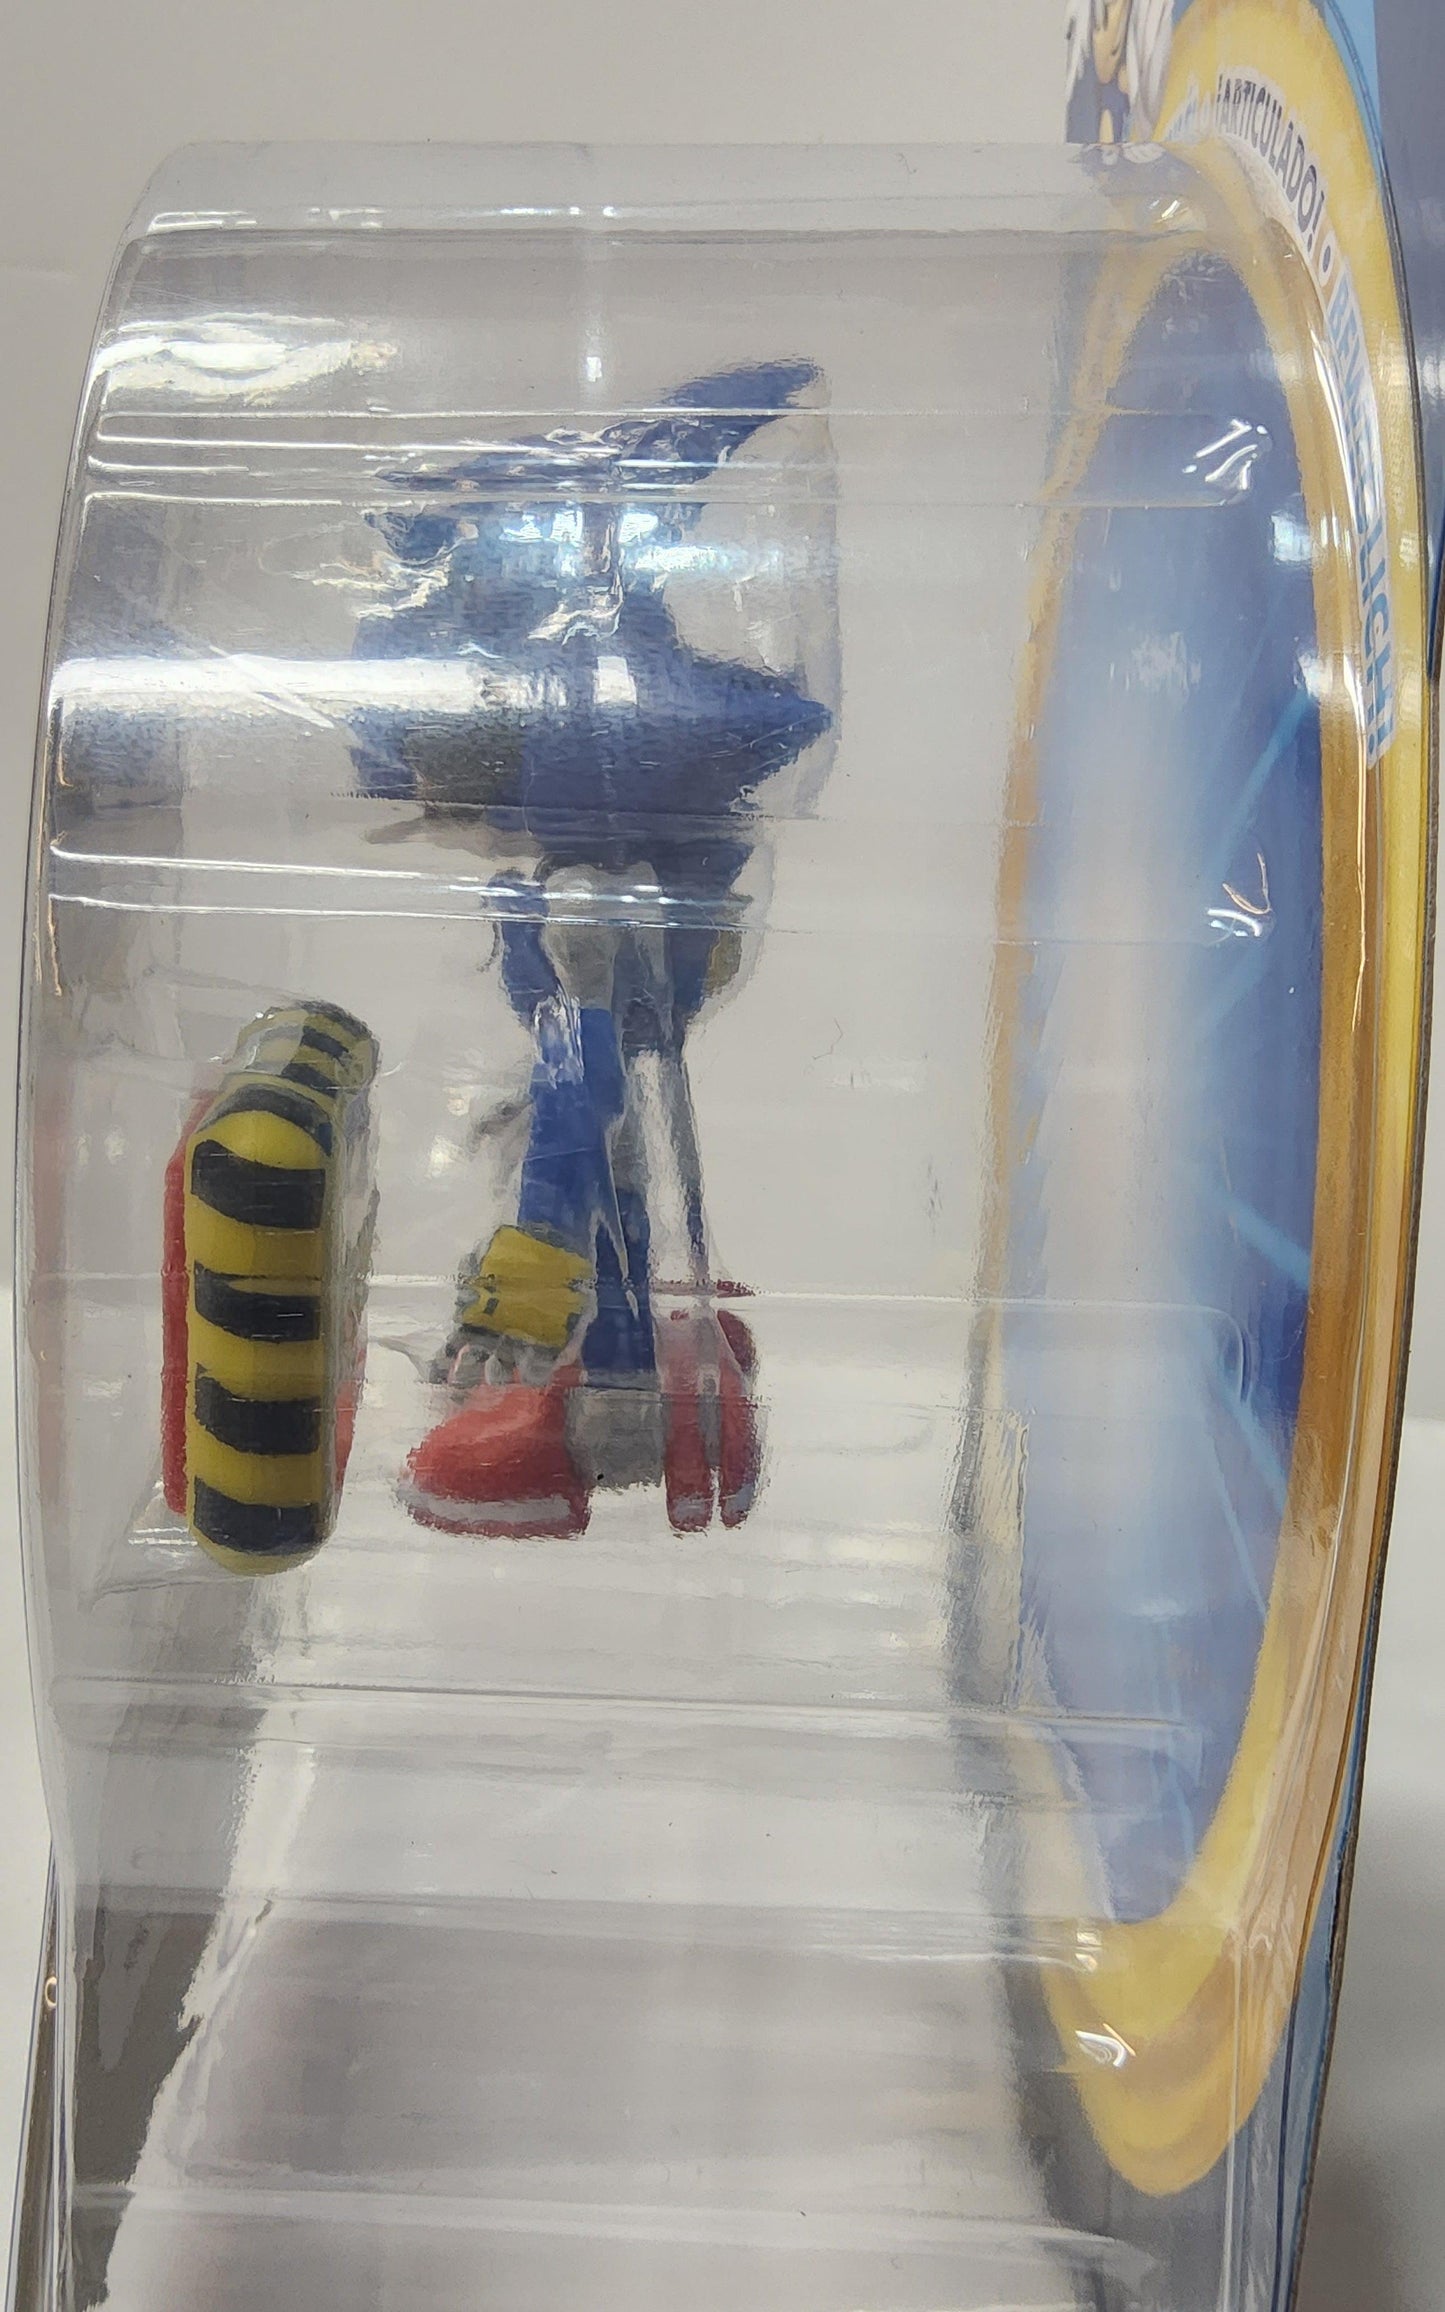 Jakks Pacific Sonic the Hedgehog Metal Sonic 4" Action Figure & Accessory - Logan's Toy Chest